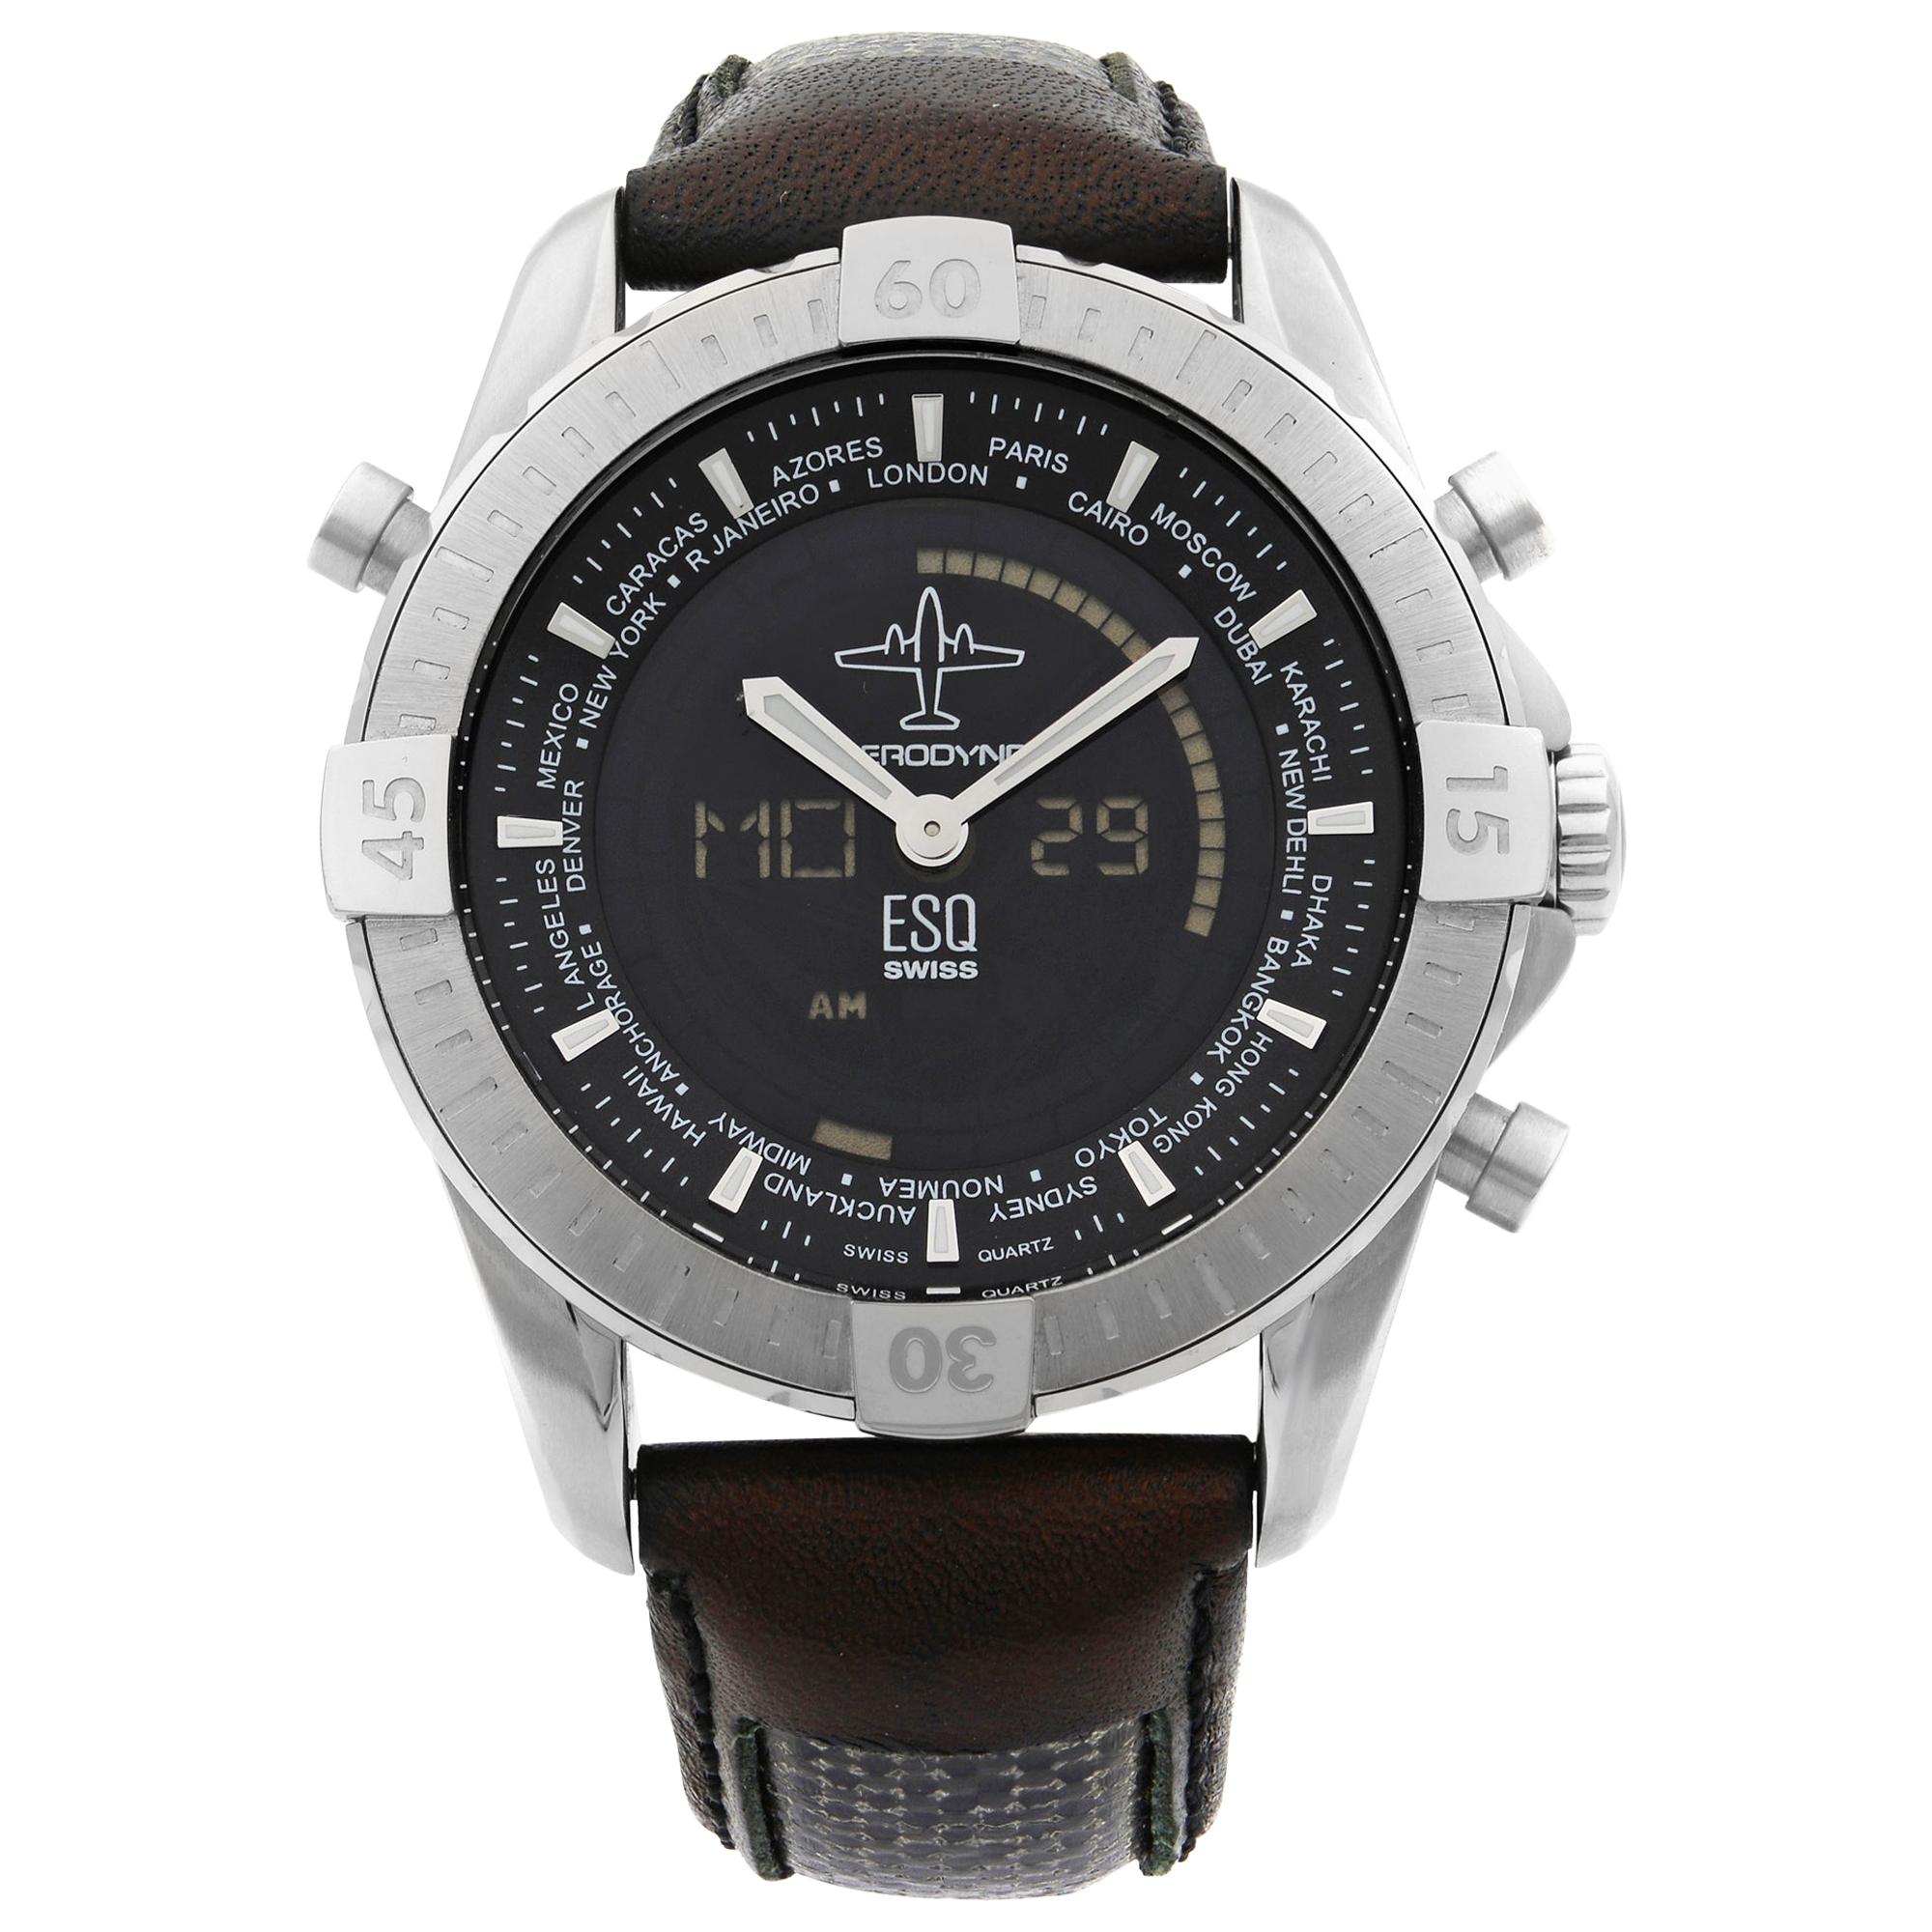 Esq Swiss Watch - For Sale on 1stDibs